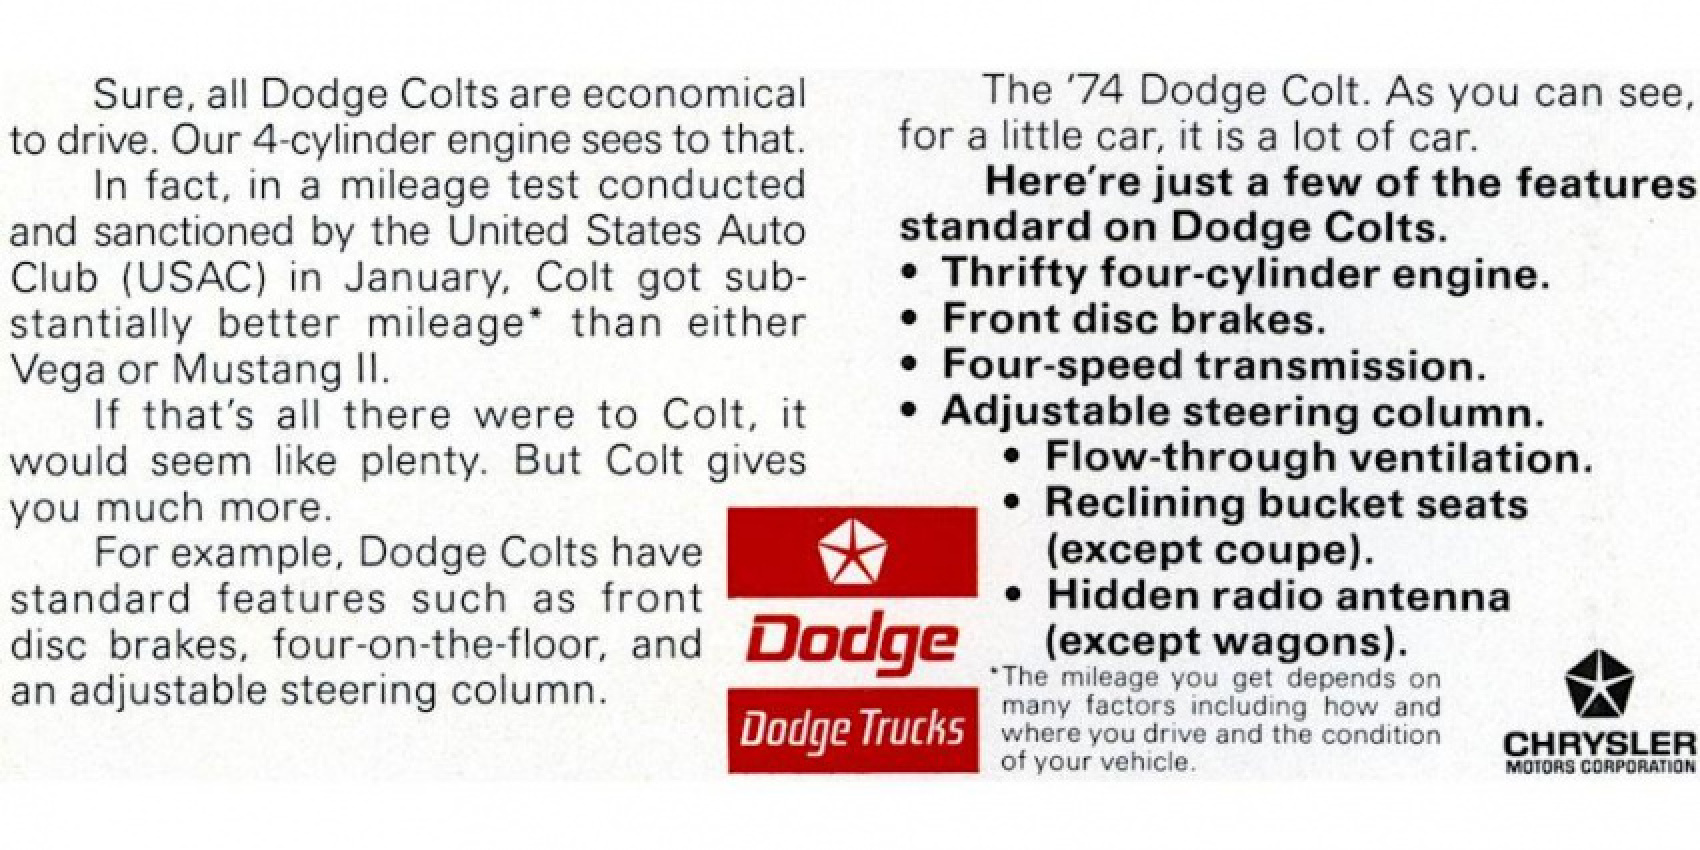 autos, dodge, 1974 dodge colt a very car-like little car